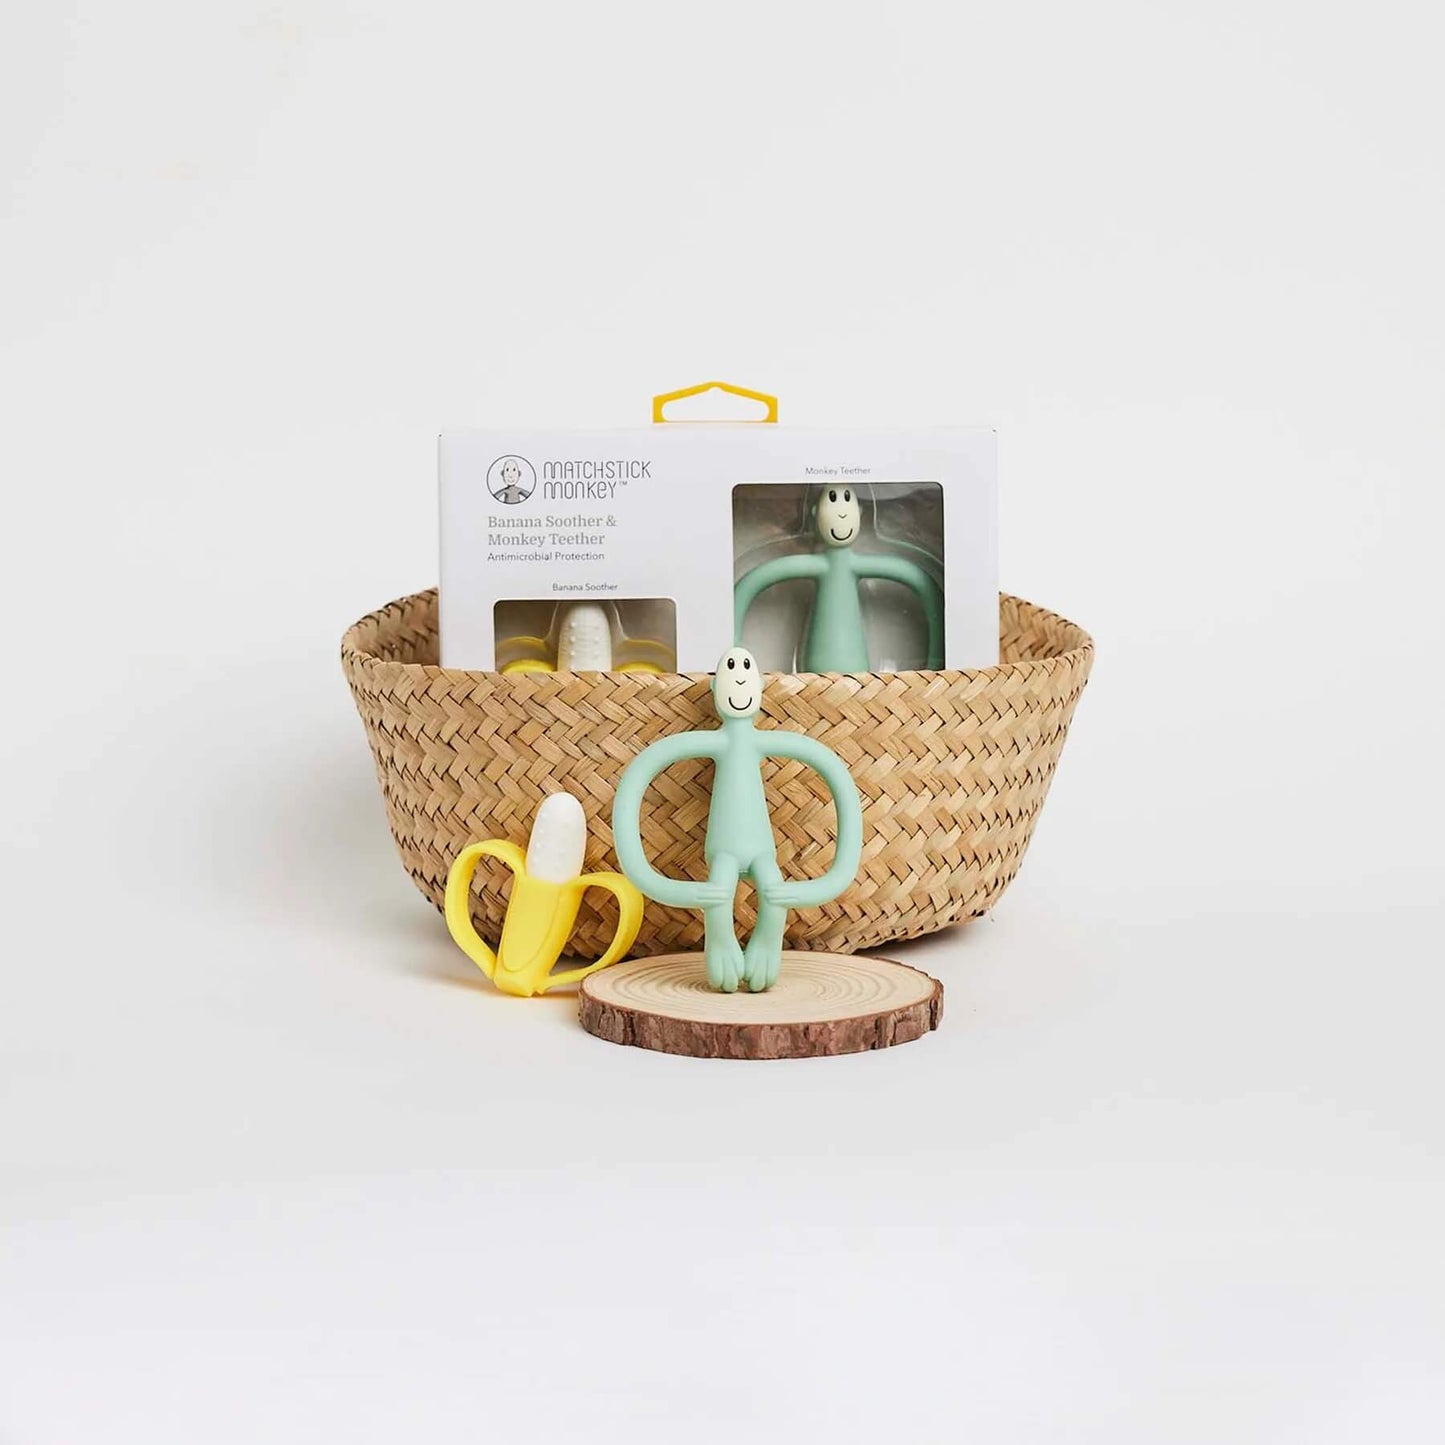 Matchstick Monkey Teether & Banana Gift Set